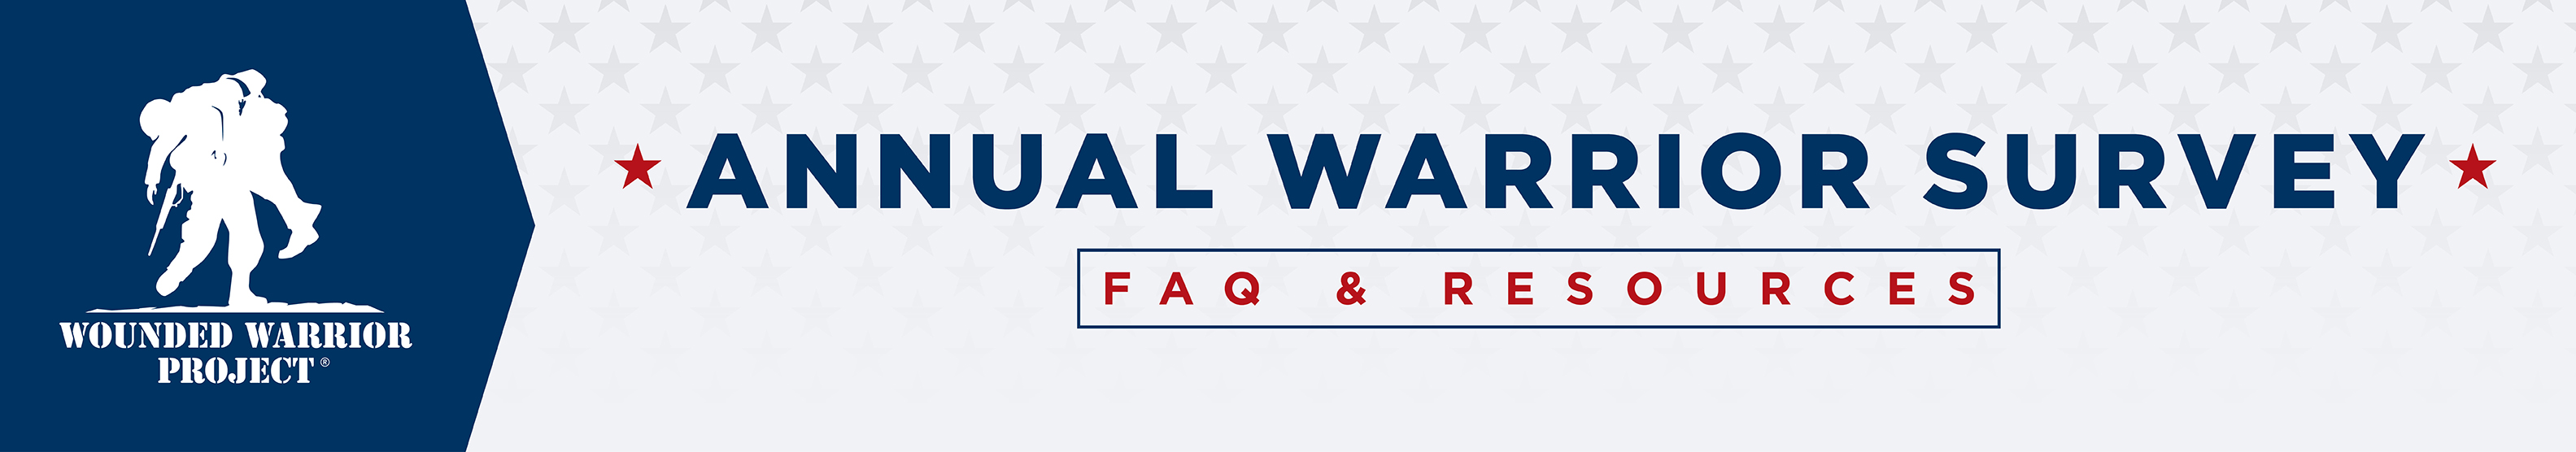 WWP Logo | Annual Warrior Survey | FAQ & Resources